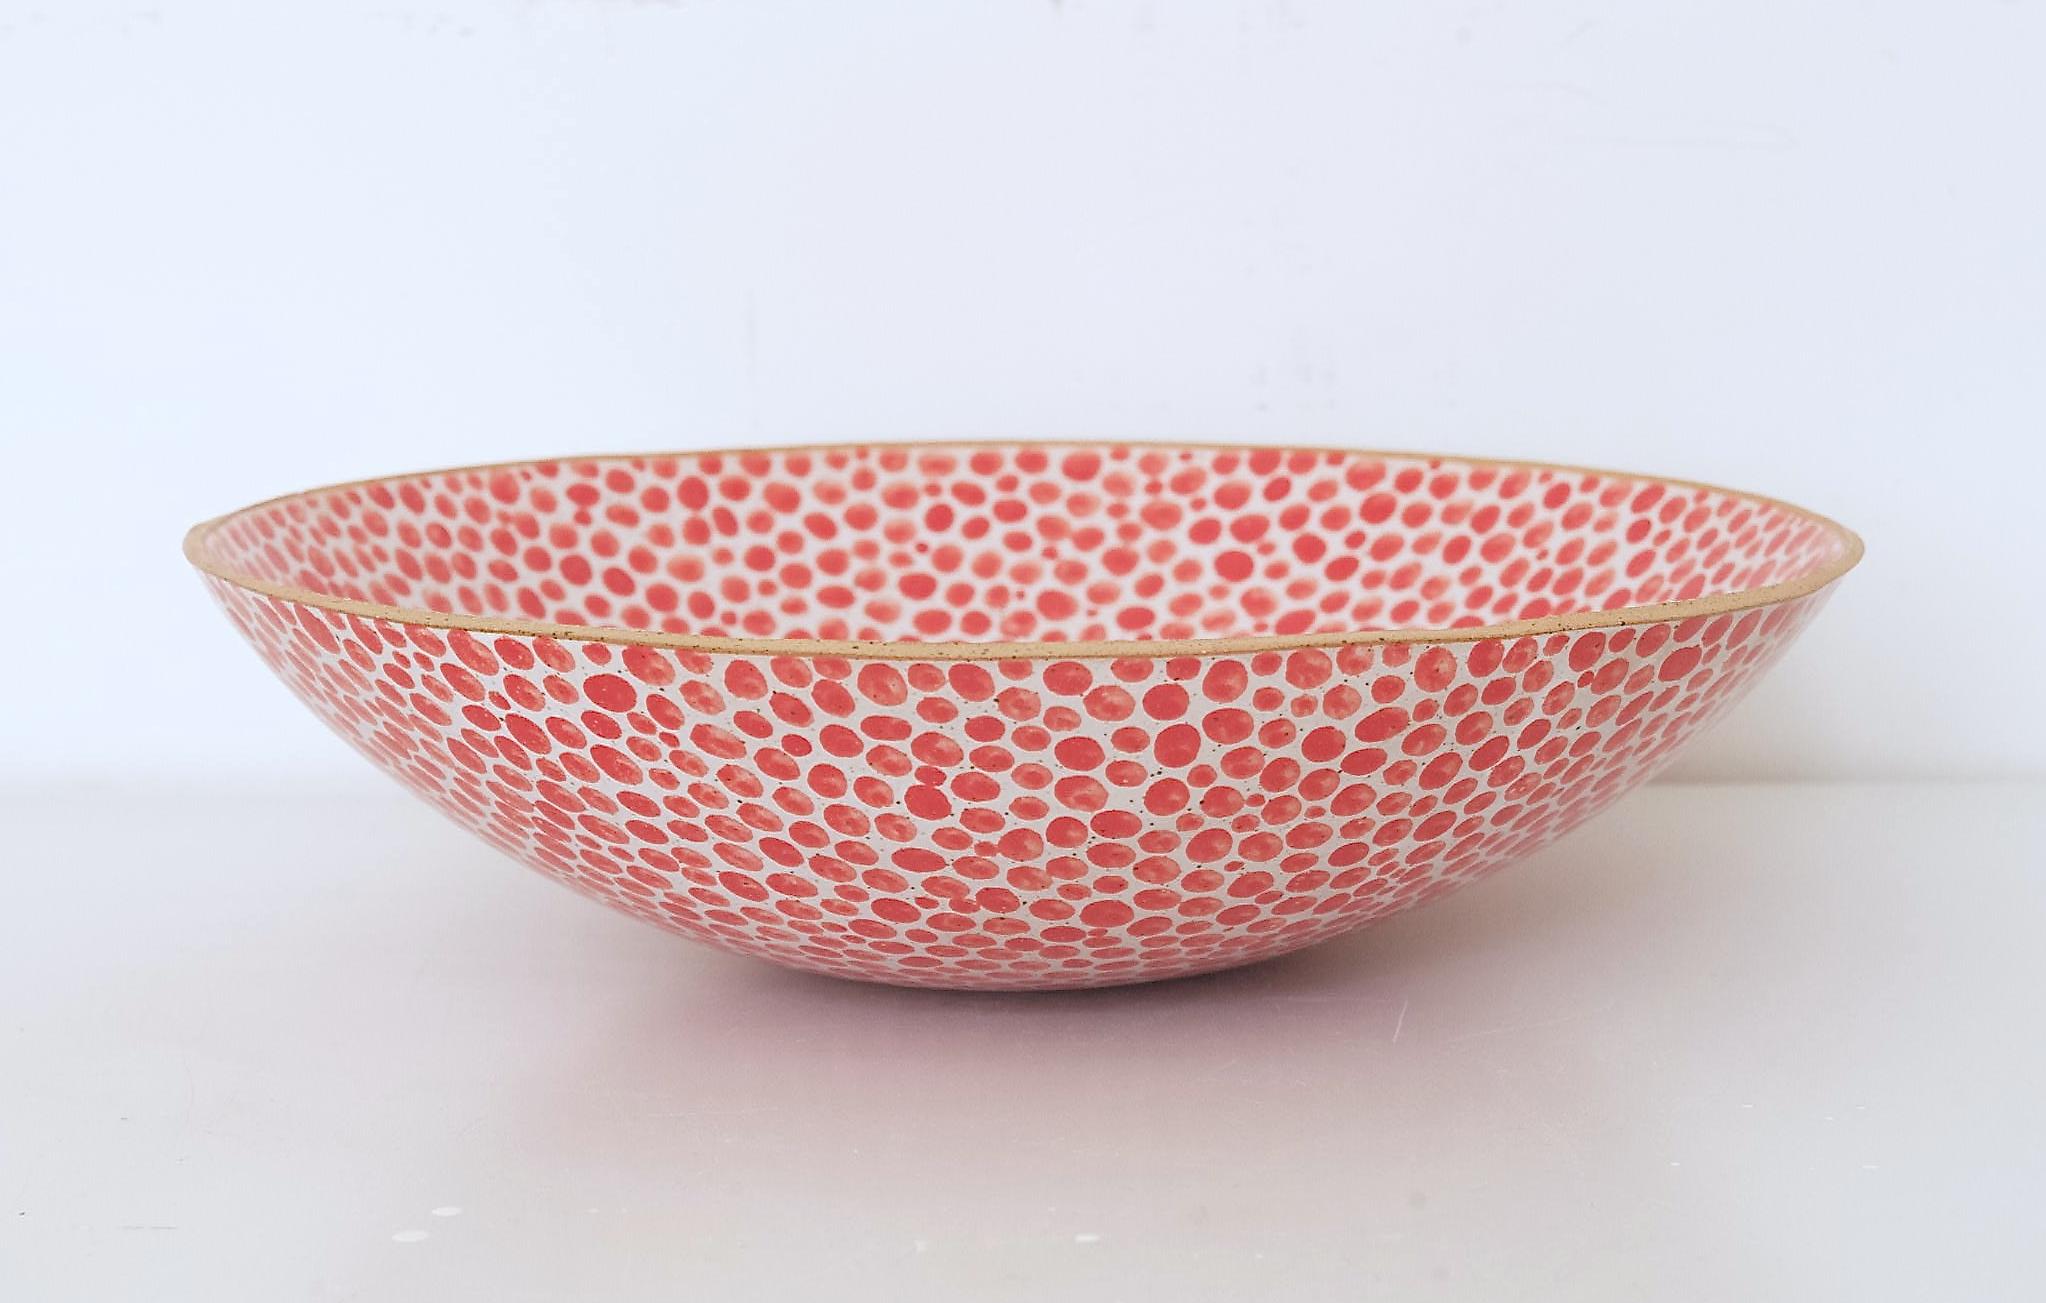 Hand-Crafted Dots Ceramic Bowl by Lana Kova, Various Glazes Available